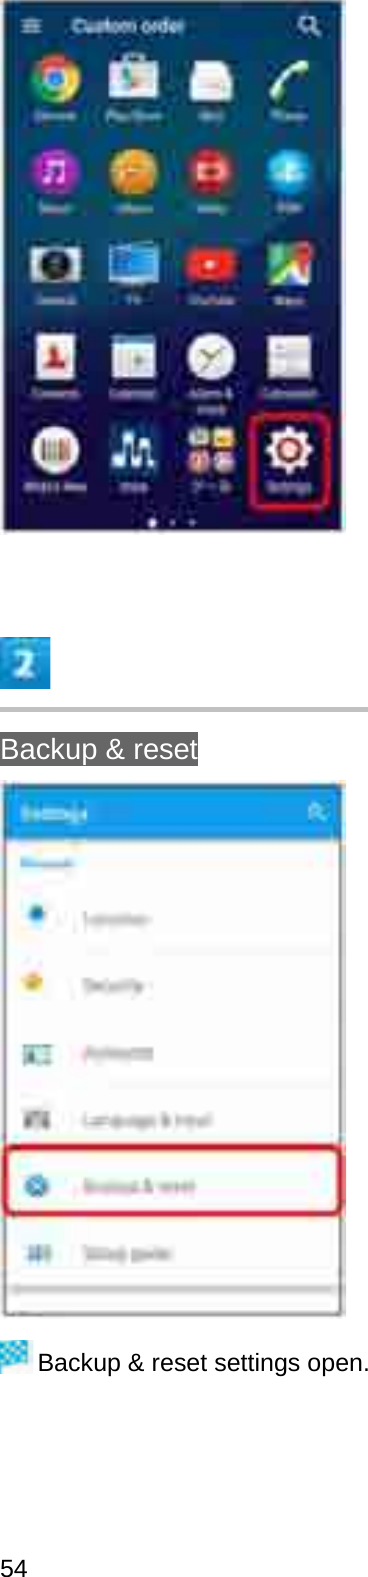 Backup &amp; resetBackup &amp; reset settings open.54